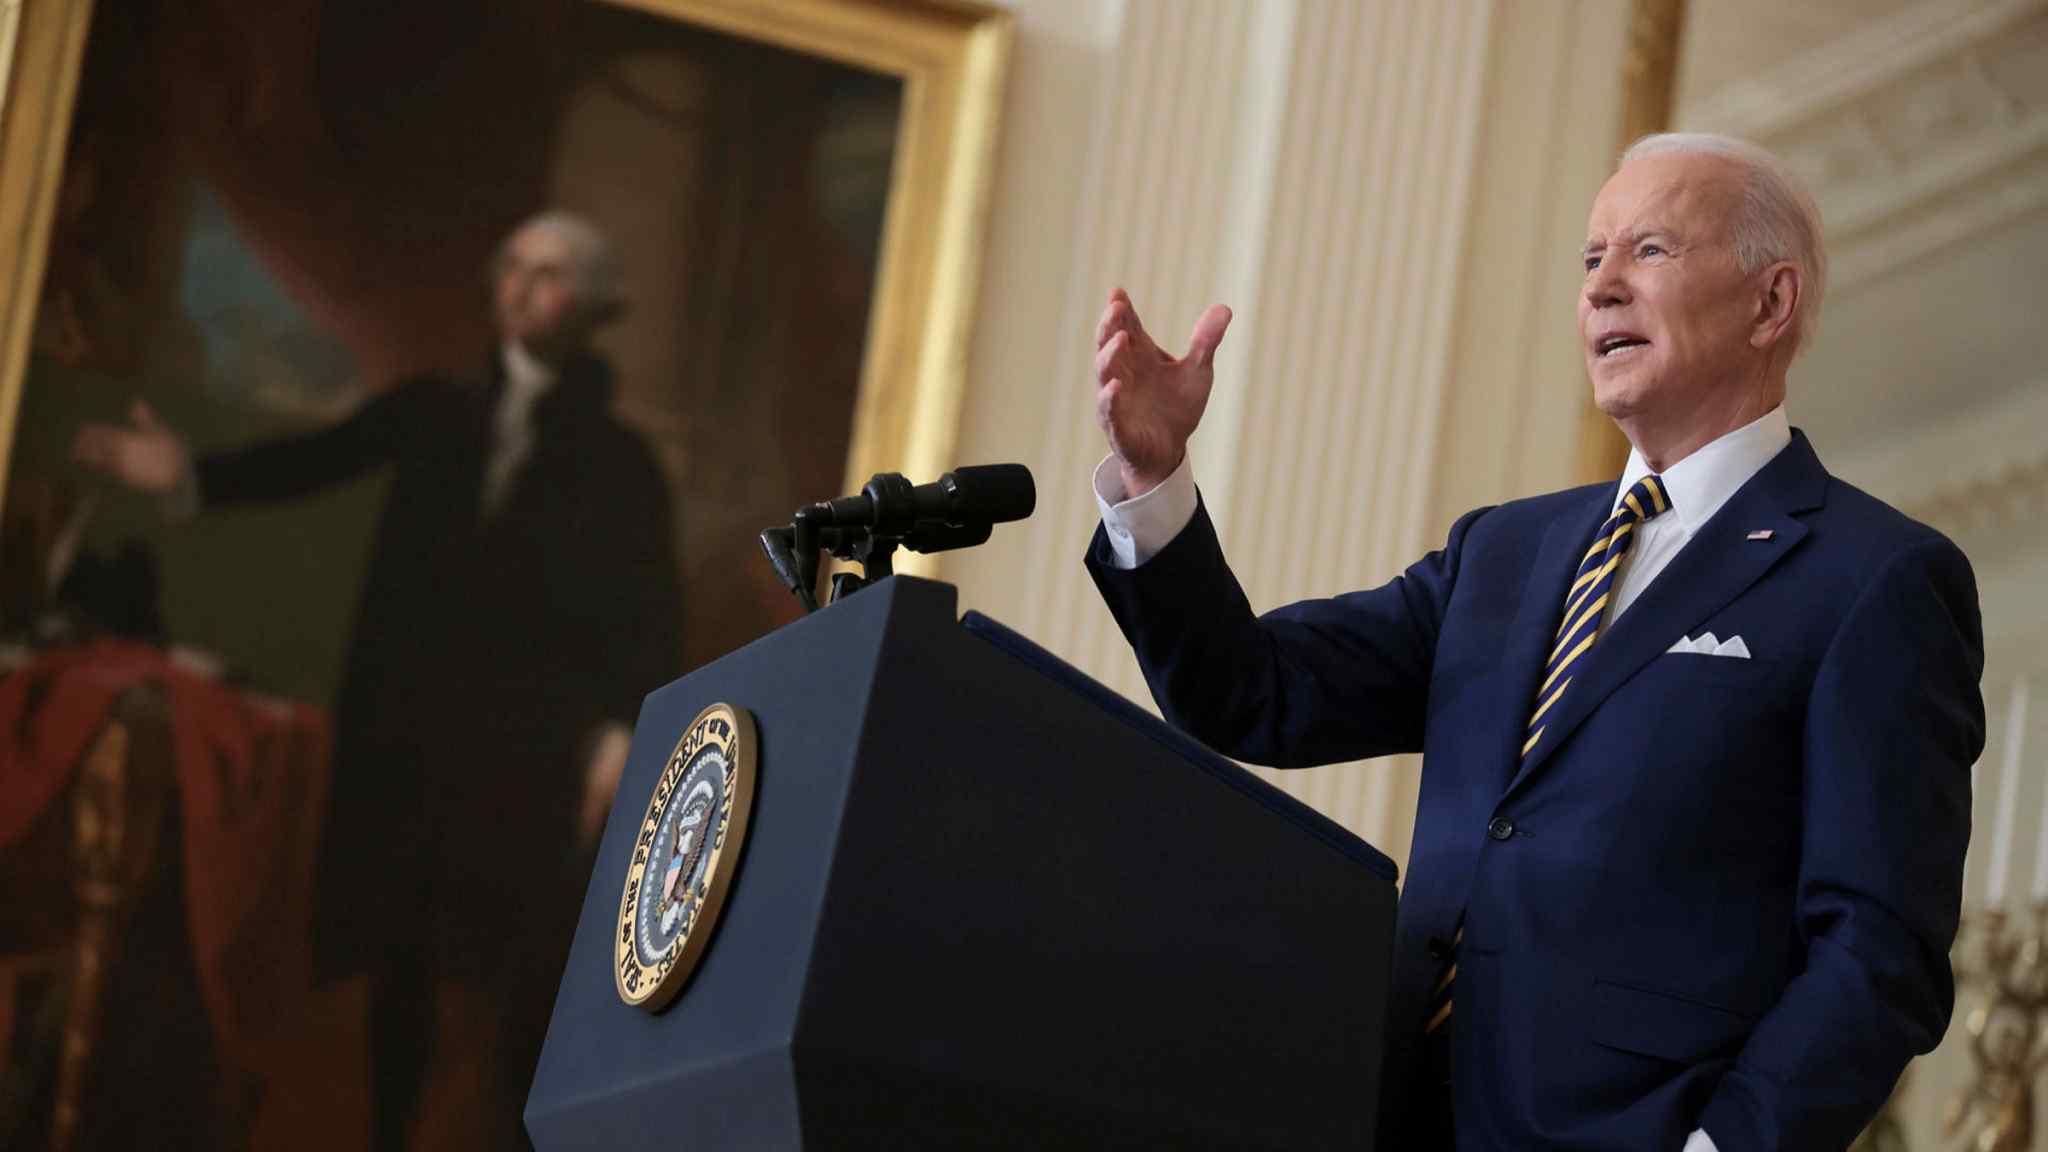 Biden bids to reboot faltering presidency as he marks one year in office